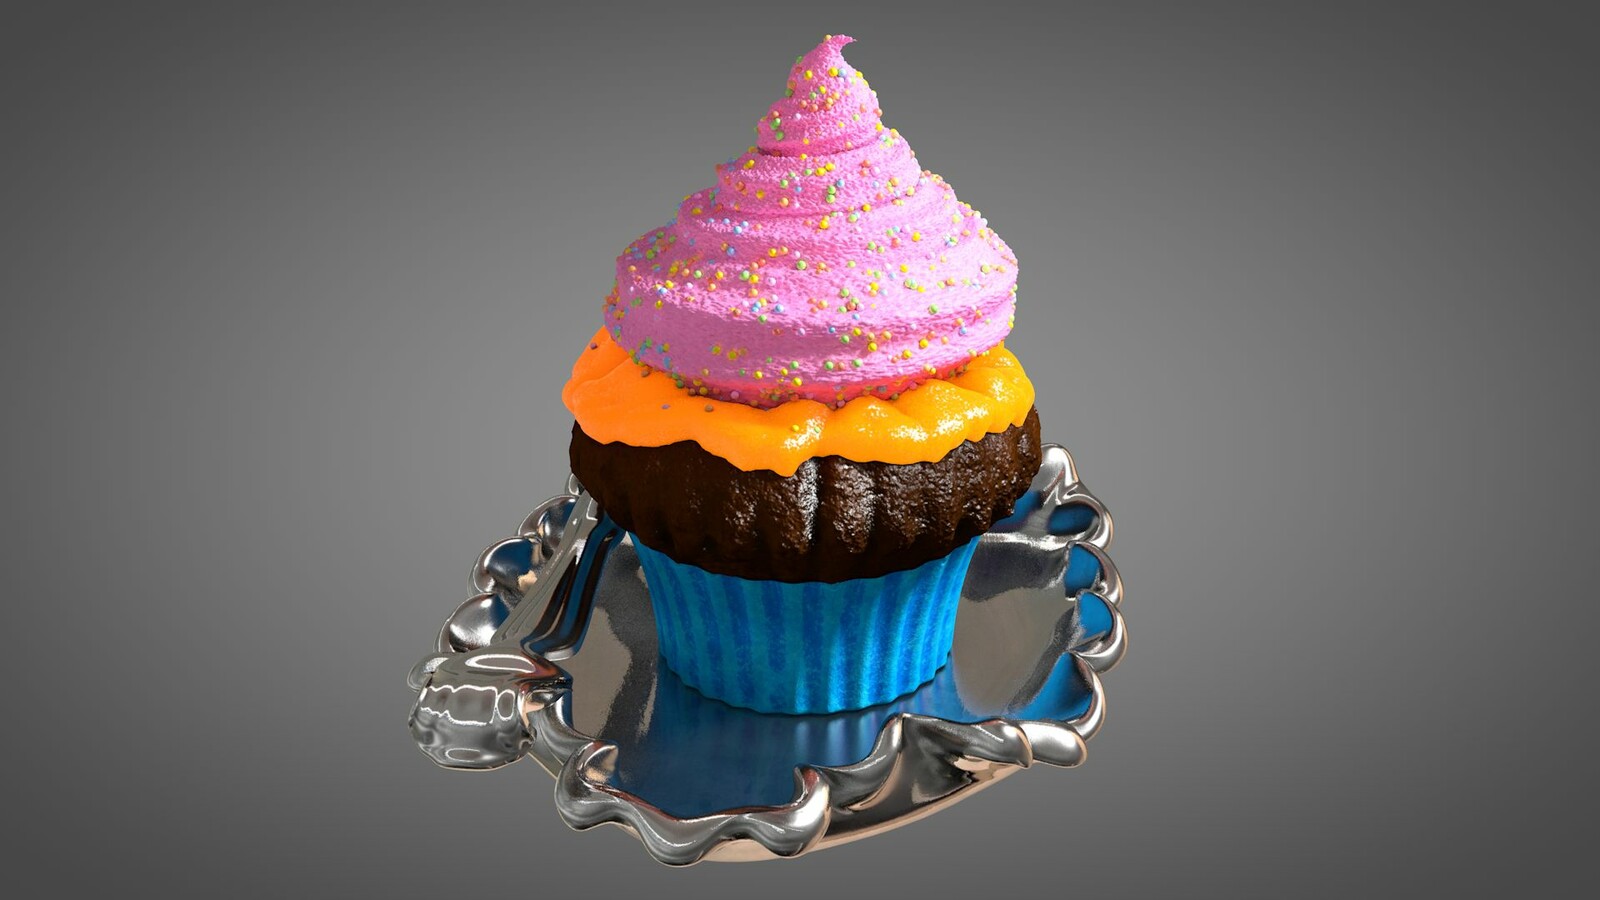 Cupcake or Muffin 04